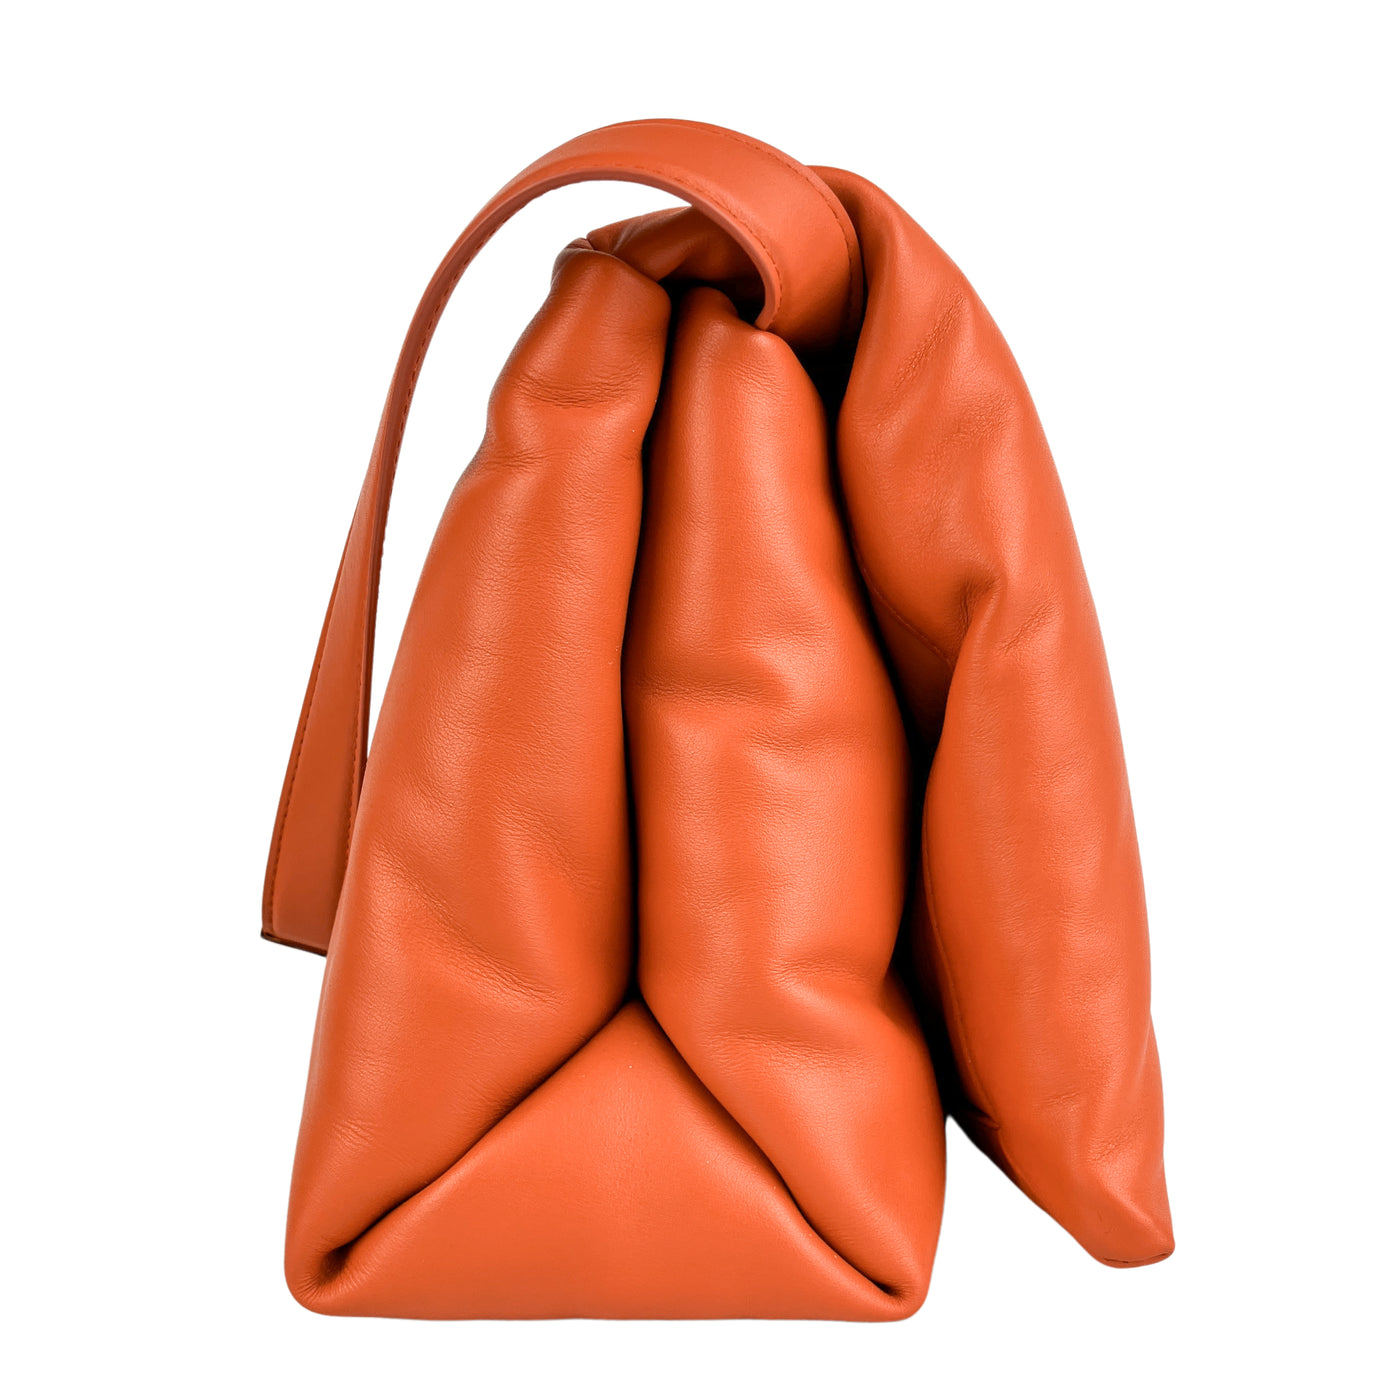 MARNI Large Prisma Bag in Orange - Discounts on MARNI at UAL